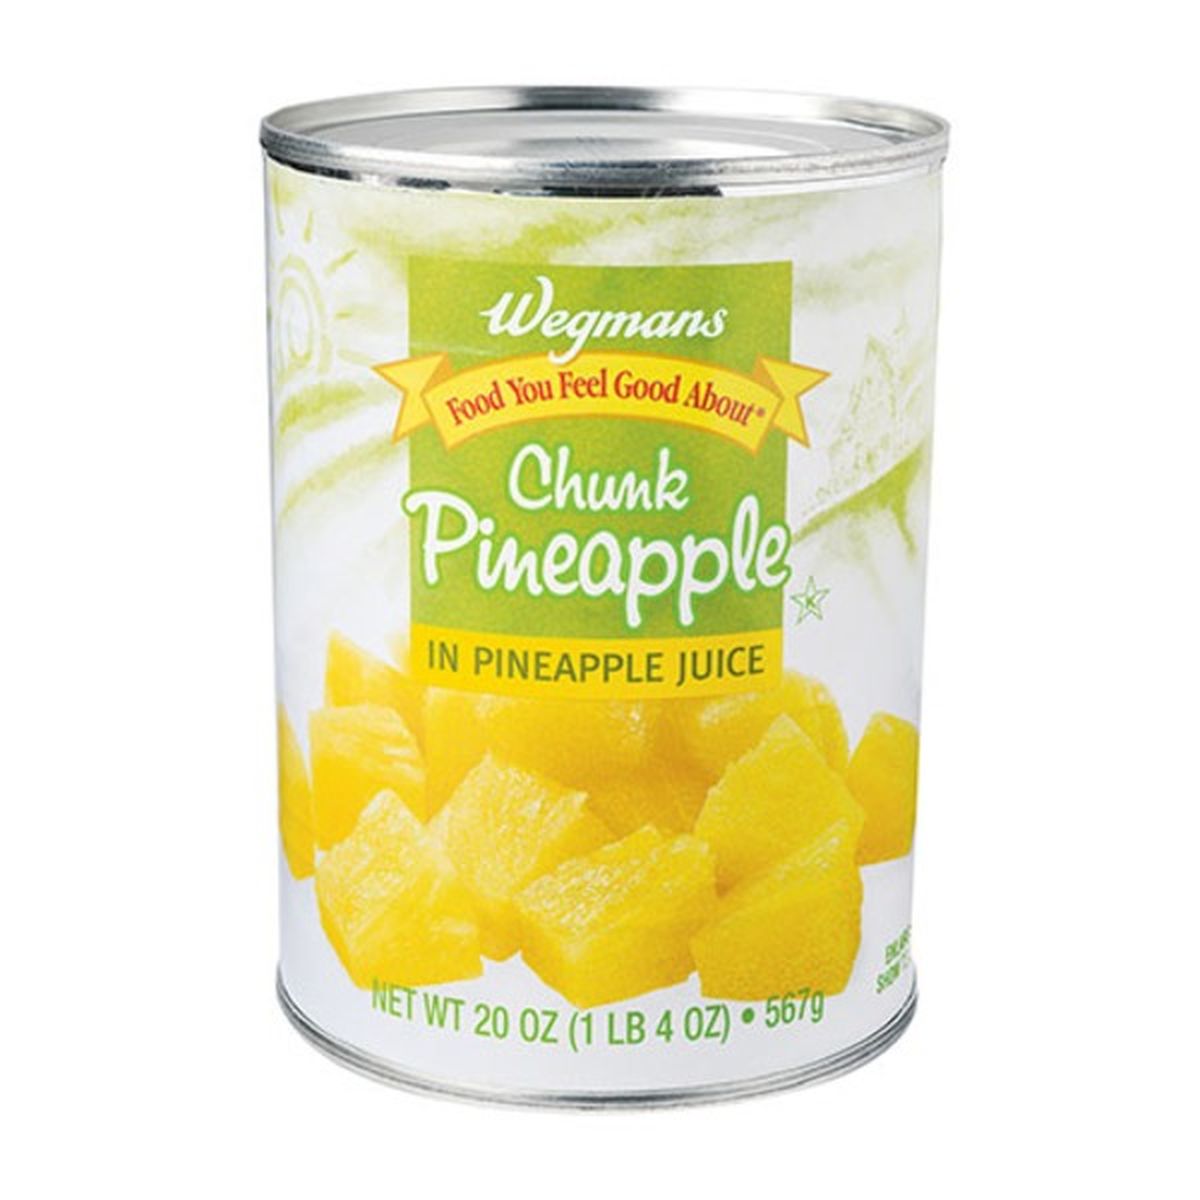 Calories in Wegmans Chunk Pineapple in Pineapple Juice